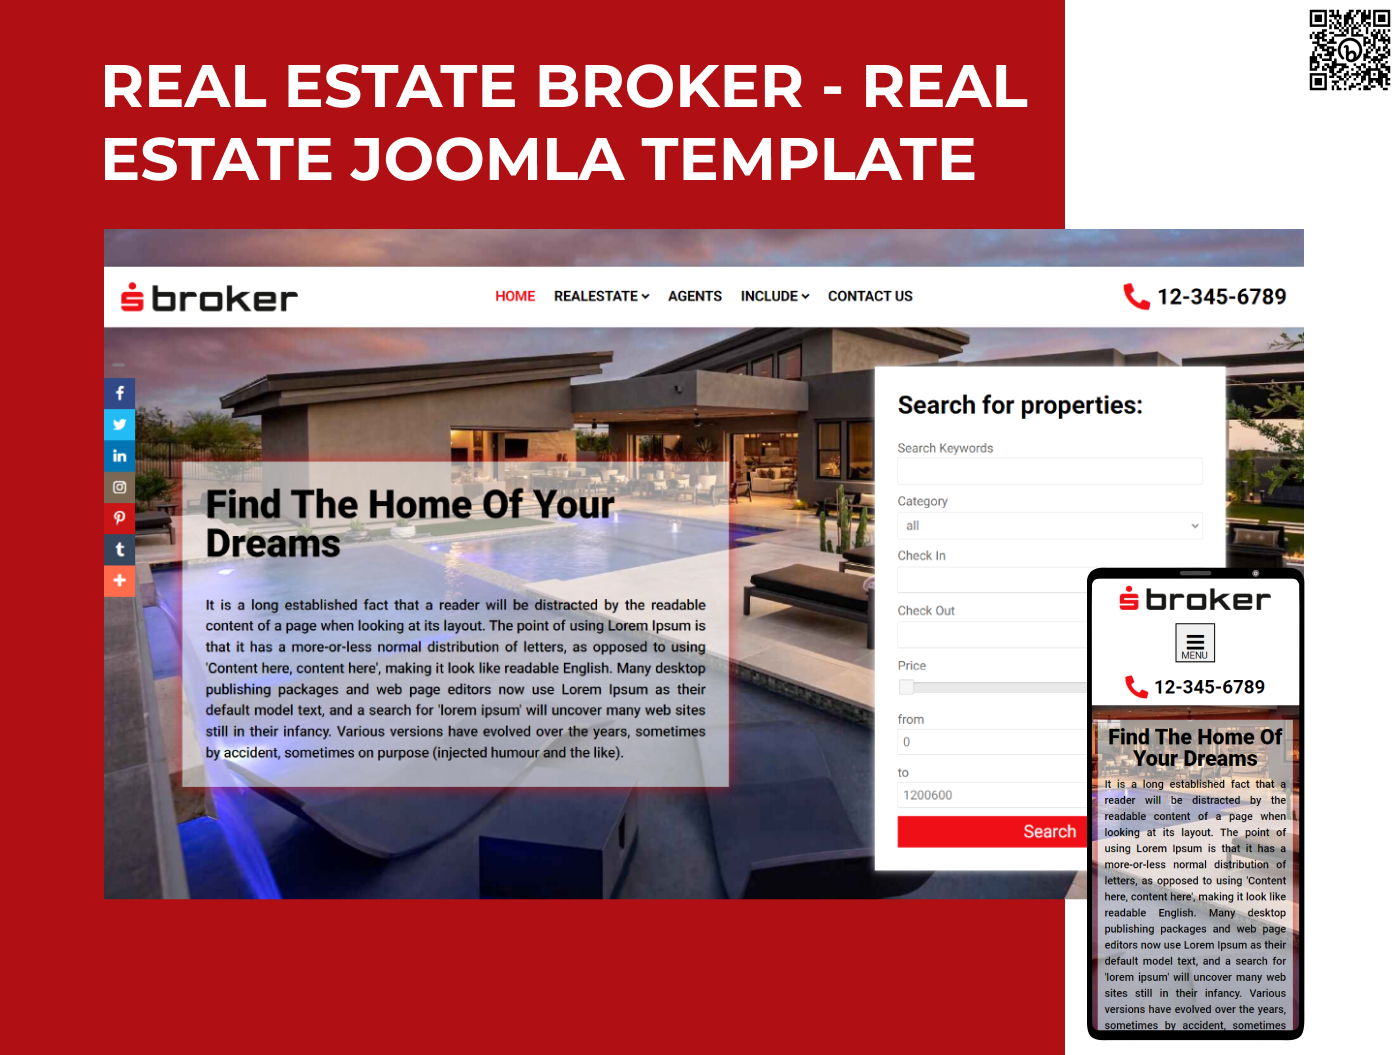 ordasoft Joomla News:  Broker - Real Estate Joomla Template